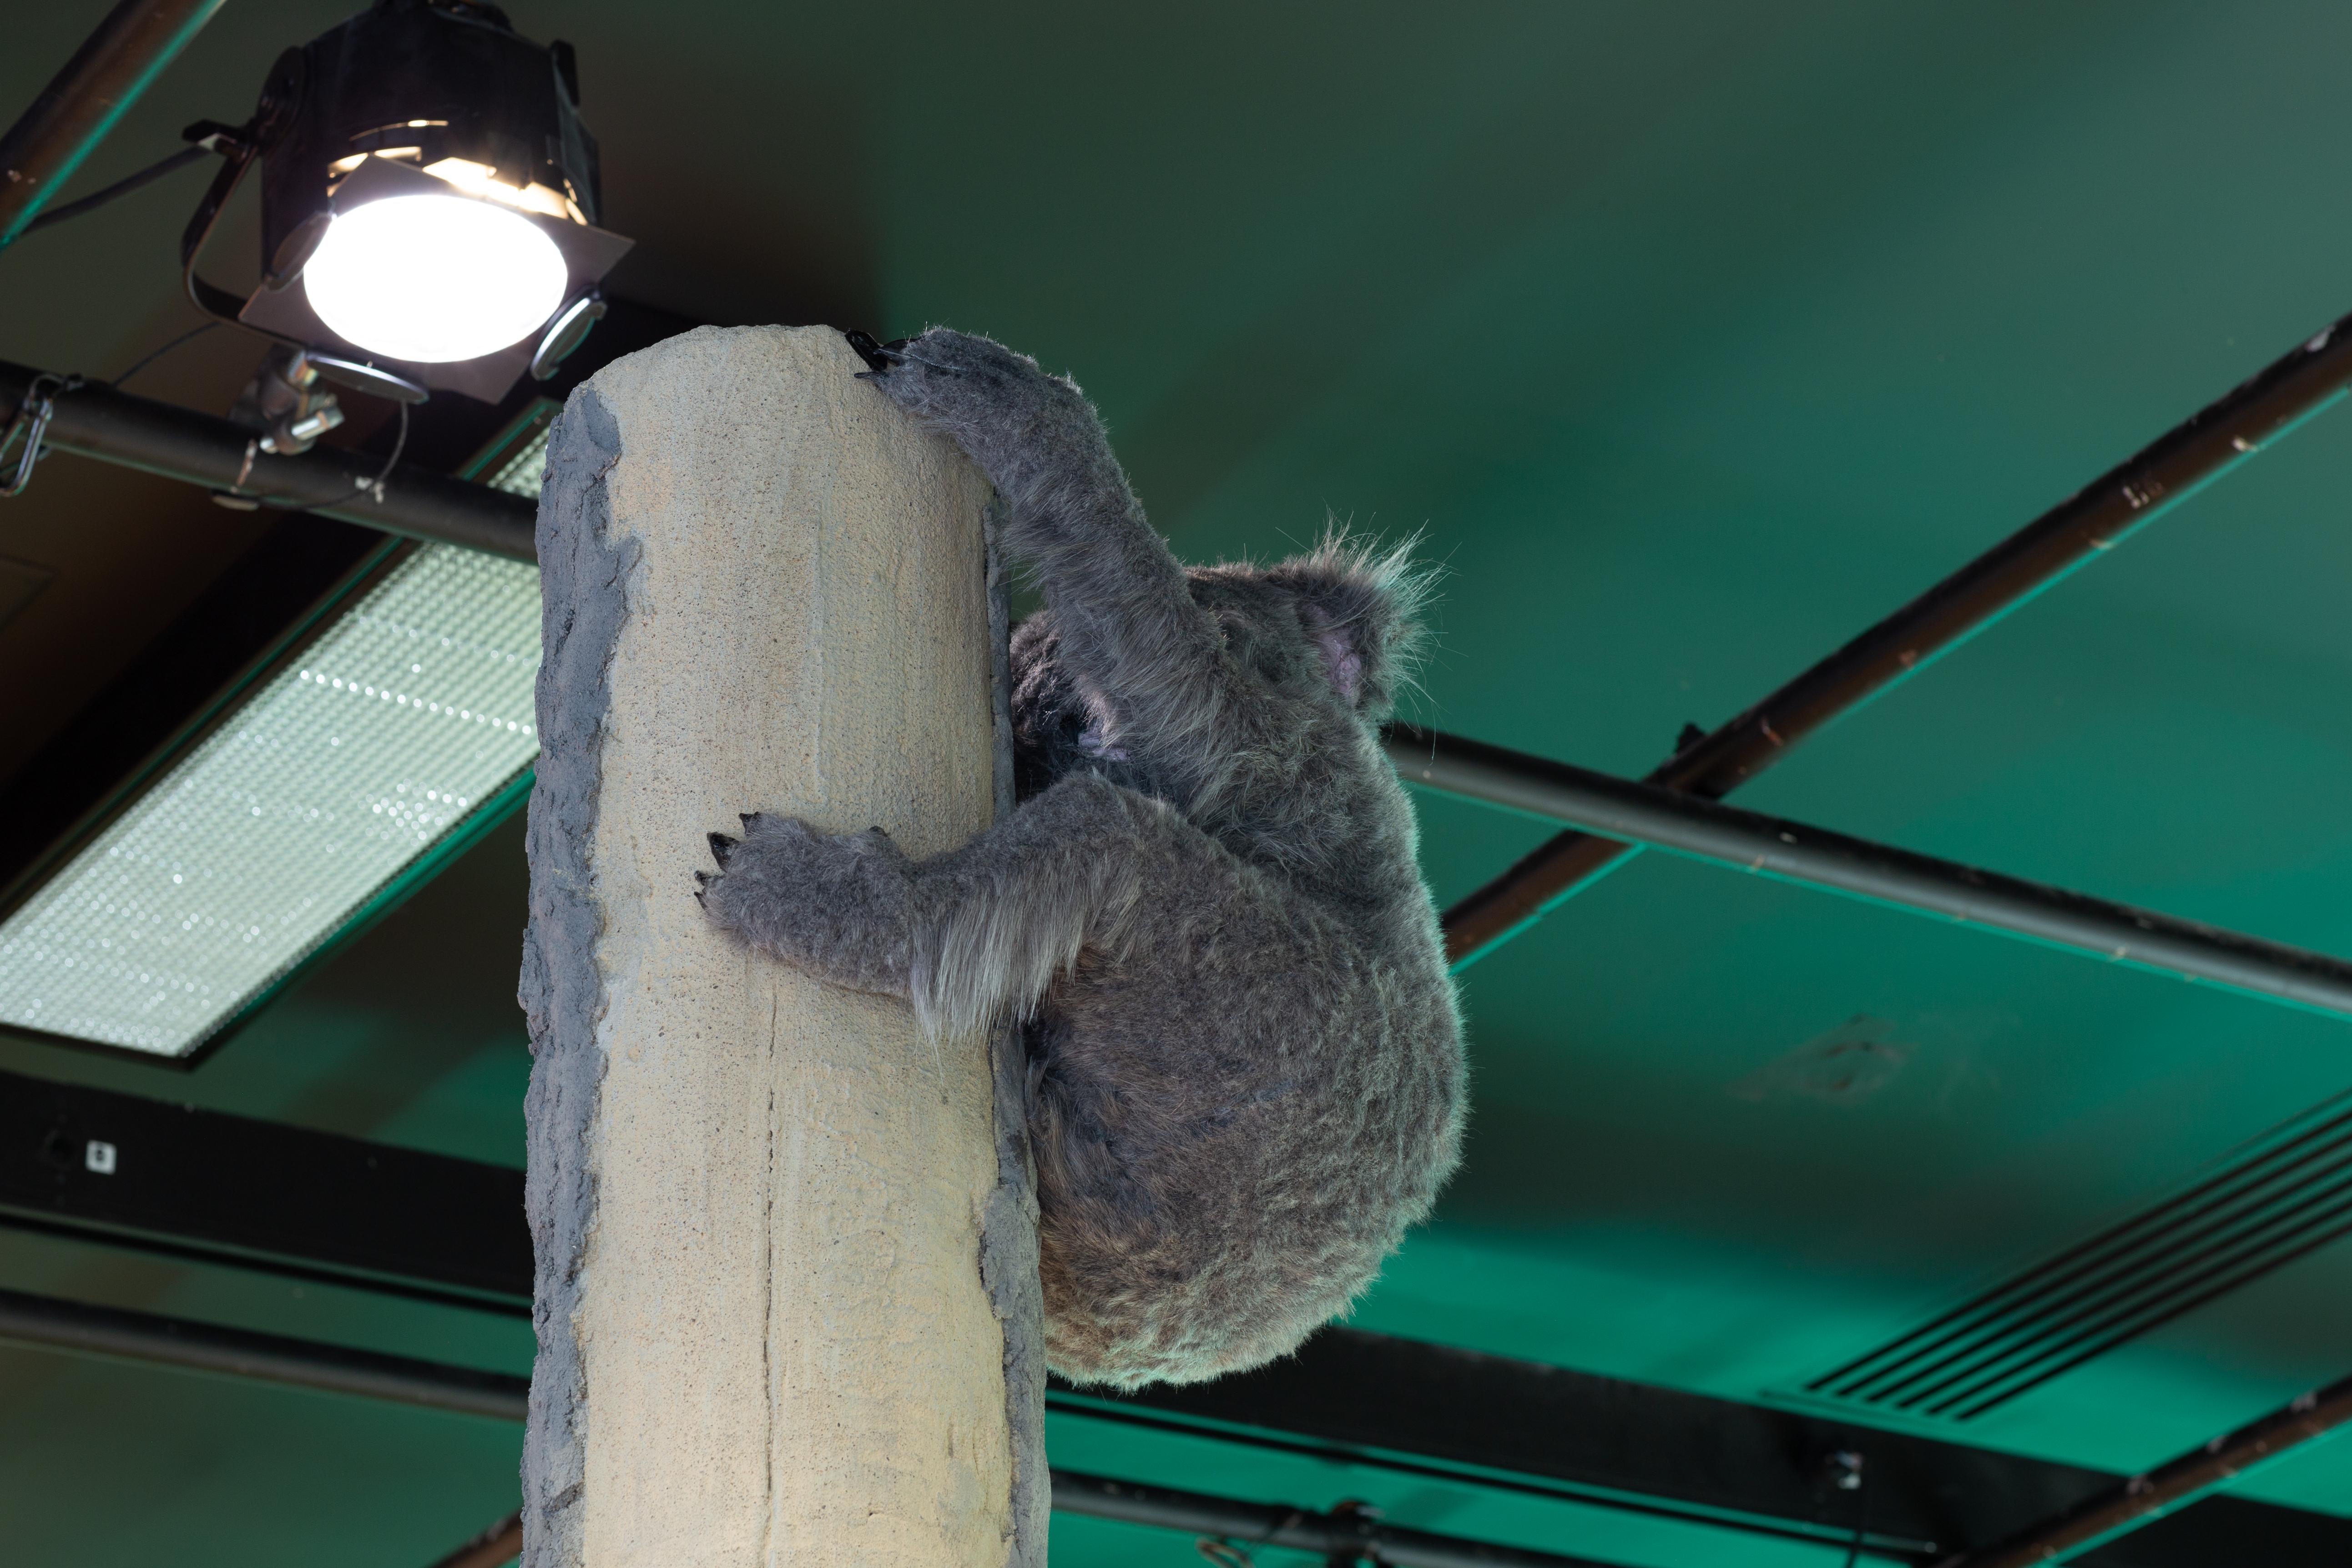 Espaces sans espèces III (Koala)